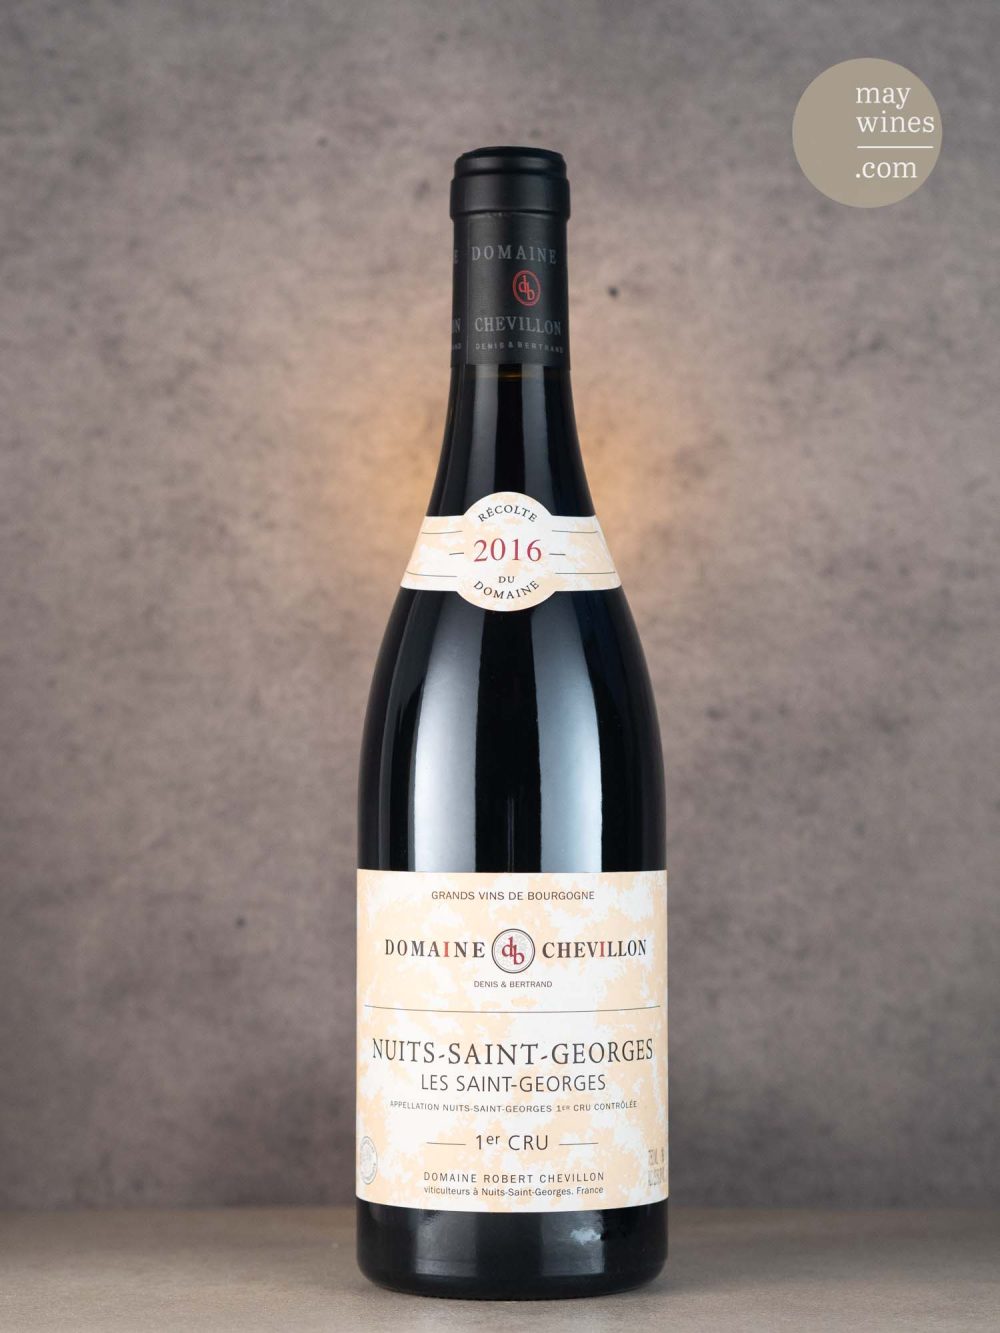 May Wines – Rotwein – 2016 Nuits-Saint-Georges Les Saint-Georges Premier Cru - Domaine Robert Chevillon